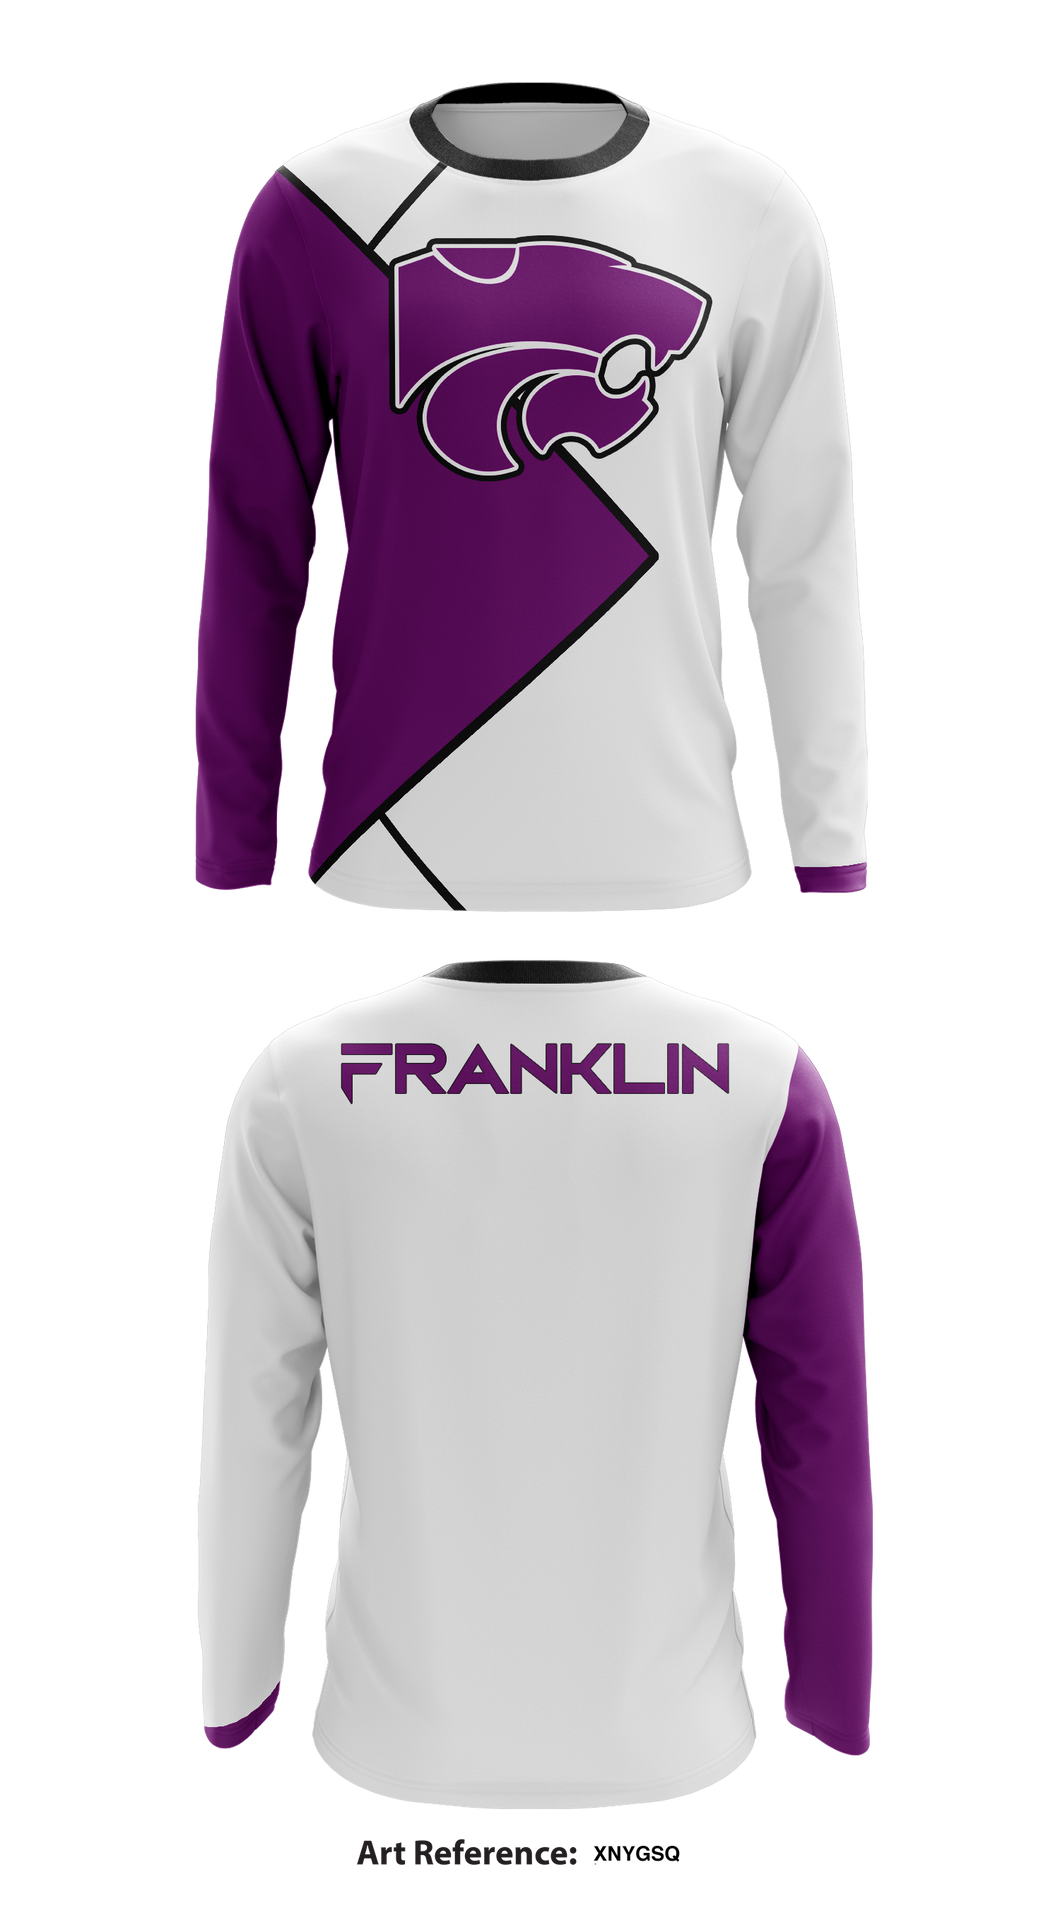 Franklin 36326011 Long Sleeve Performance Shirt - 1